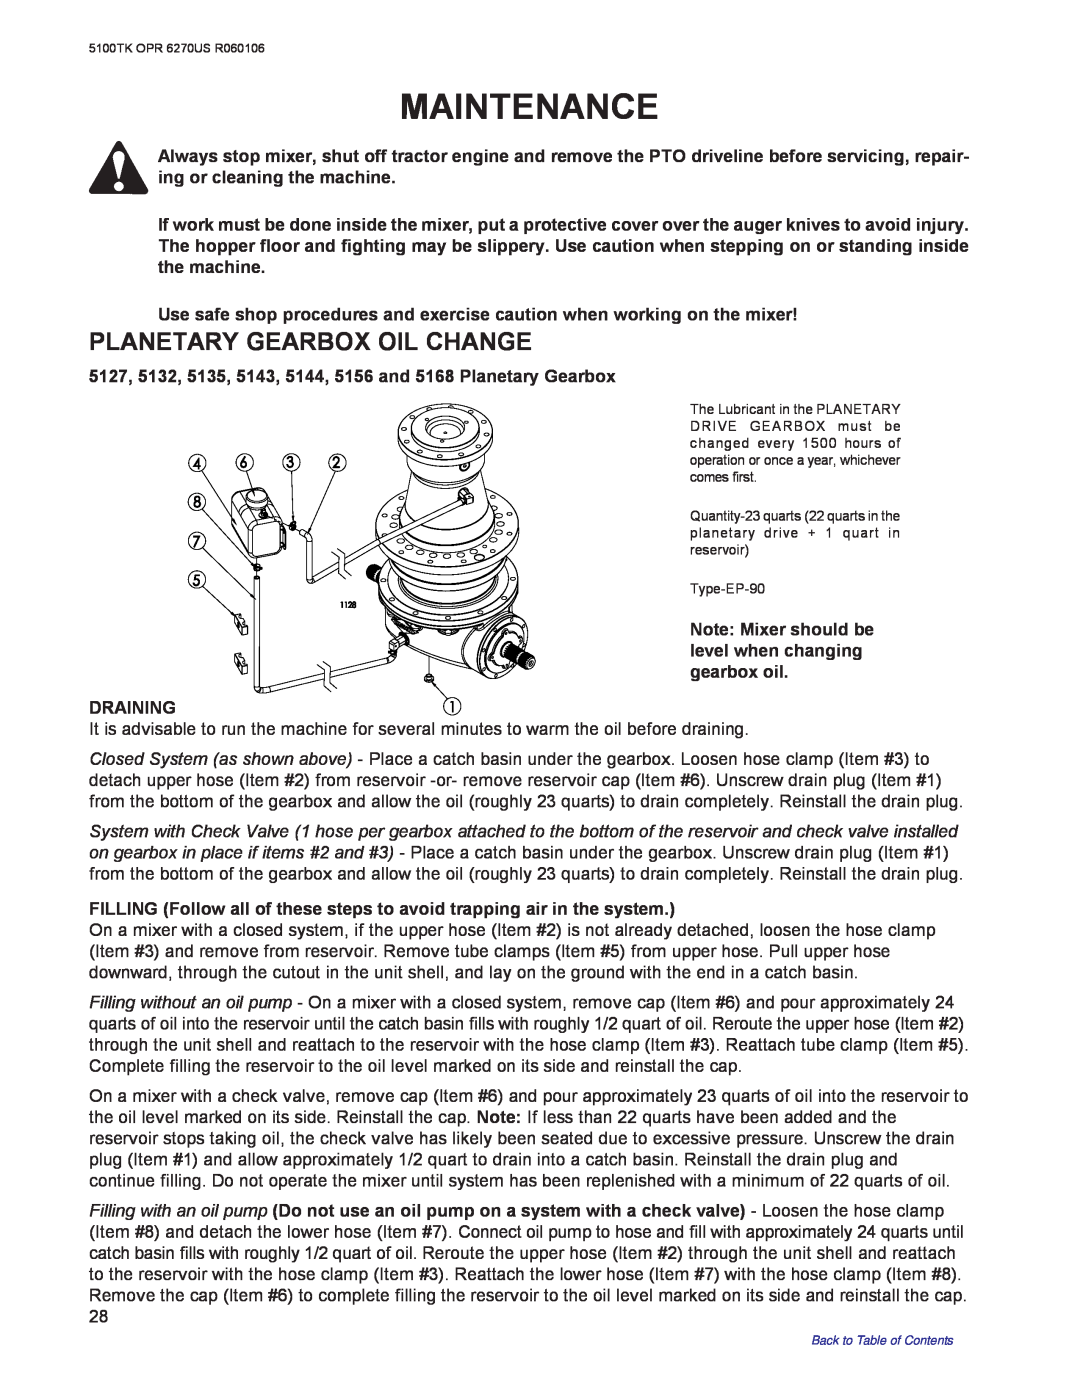 Kuhn Rikon 5100 instruction manual Maintenance, Planetary Gearbox Oil Change 